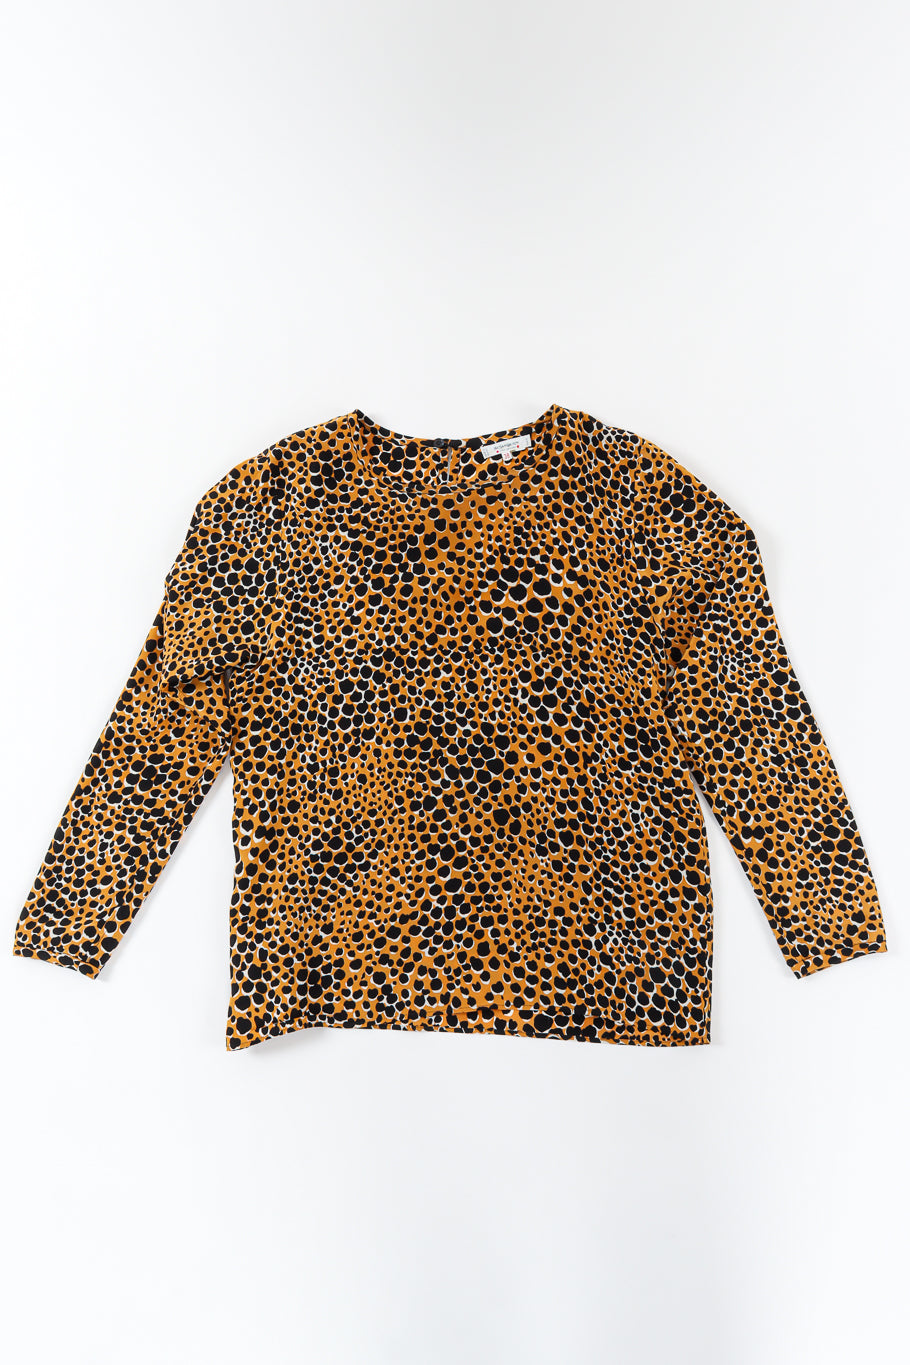 Vintage Yves Saint Laurent Cheetah Print Silk Top front flat @ Recess LA